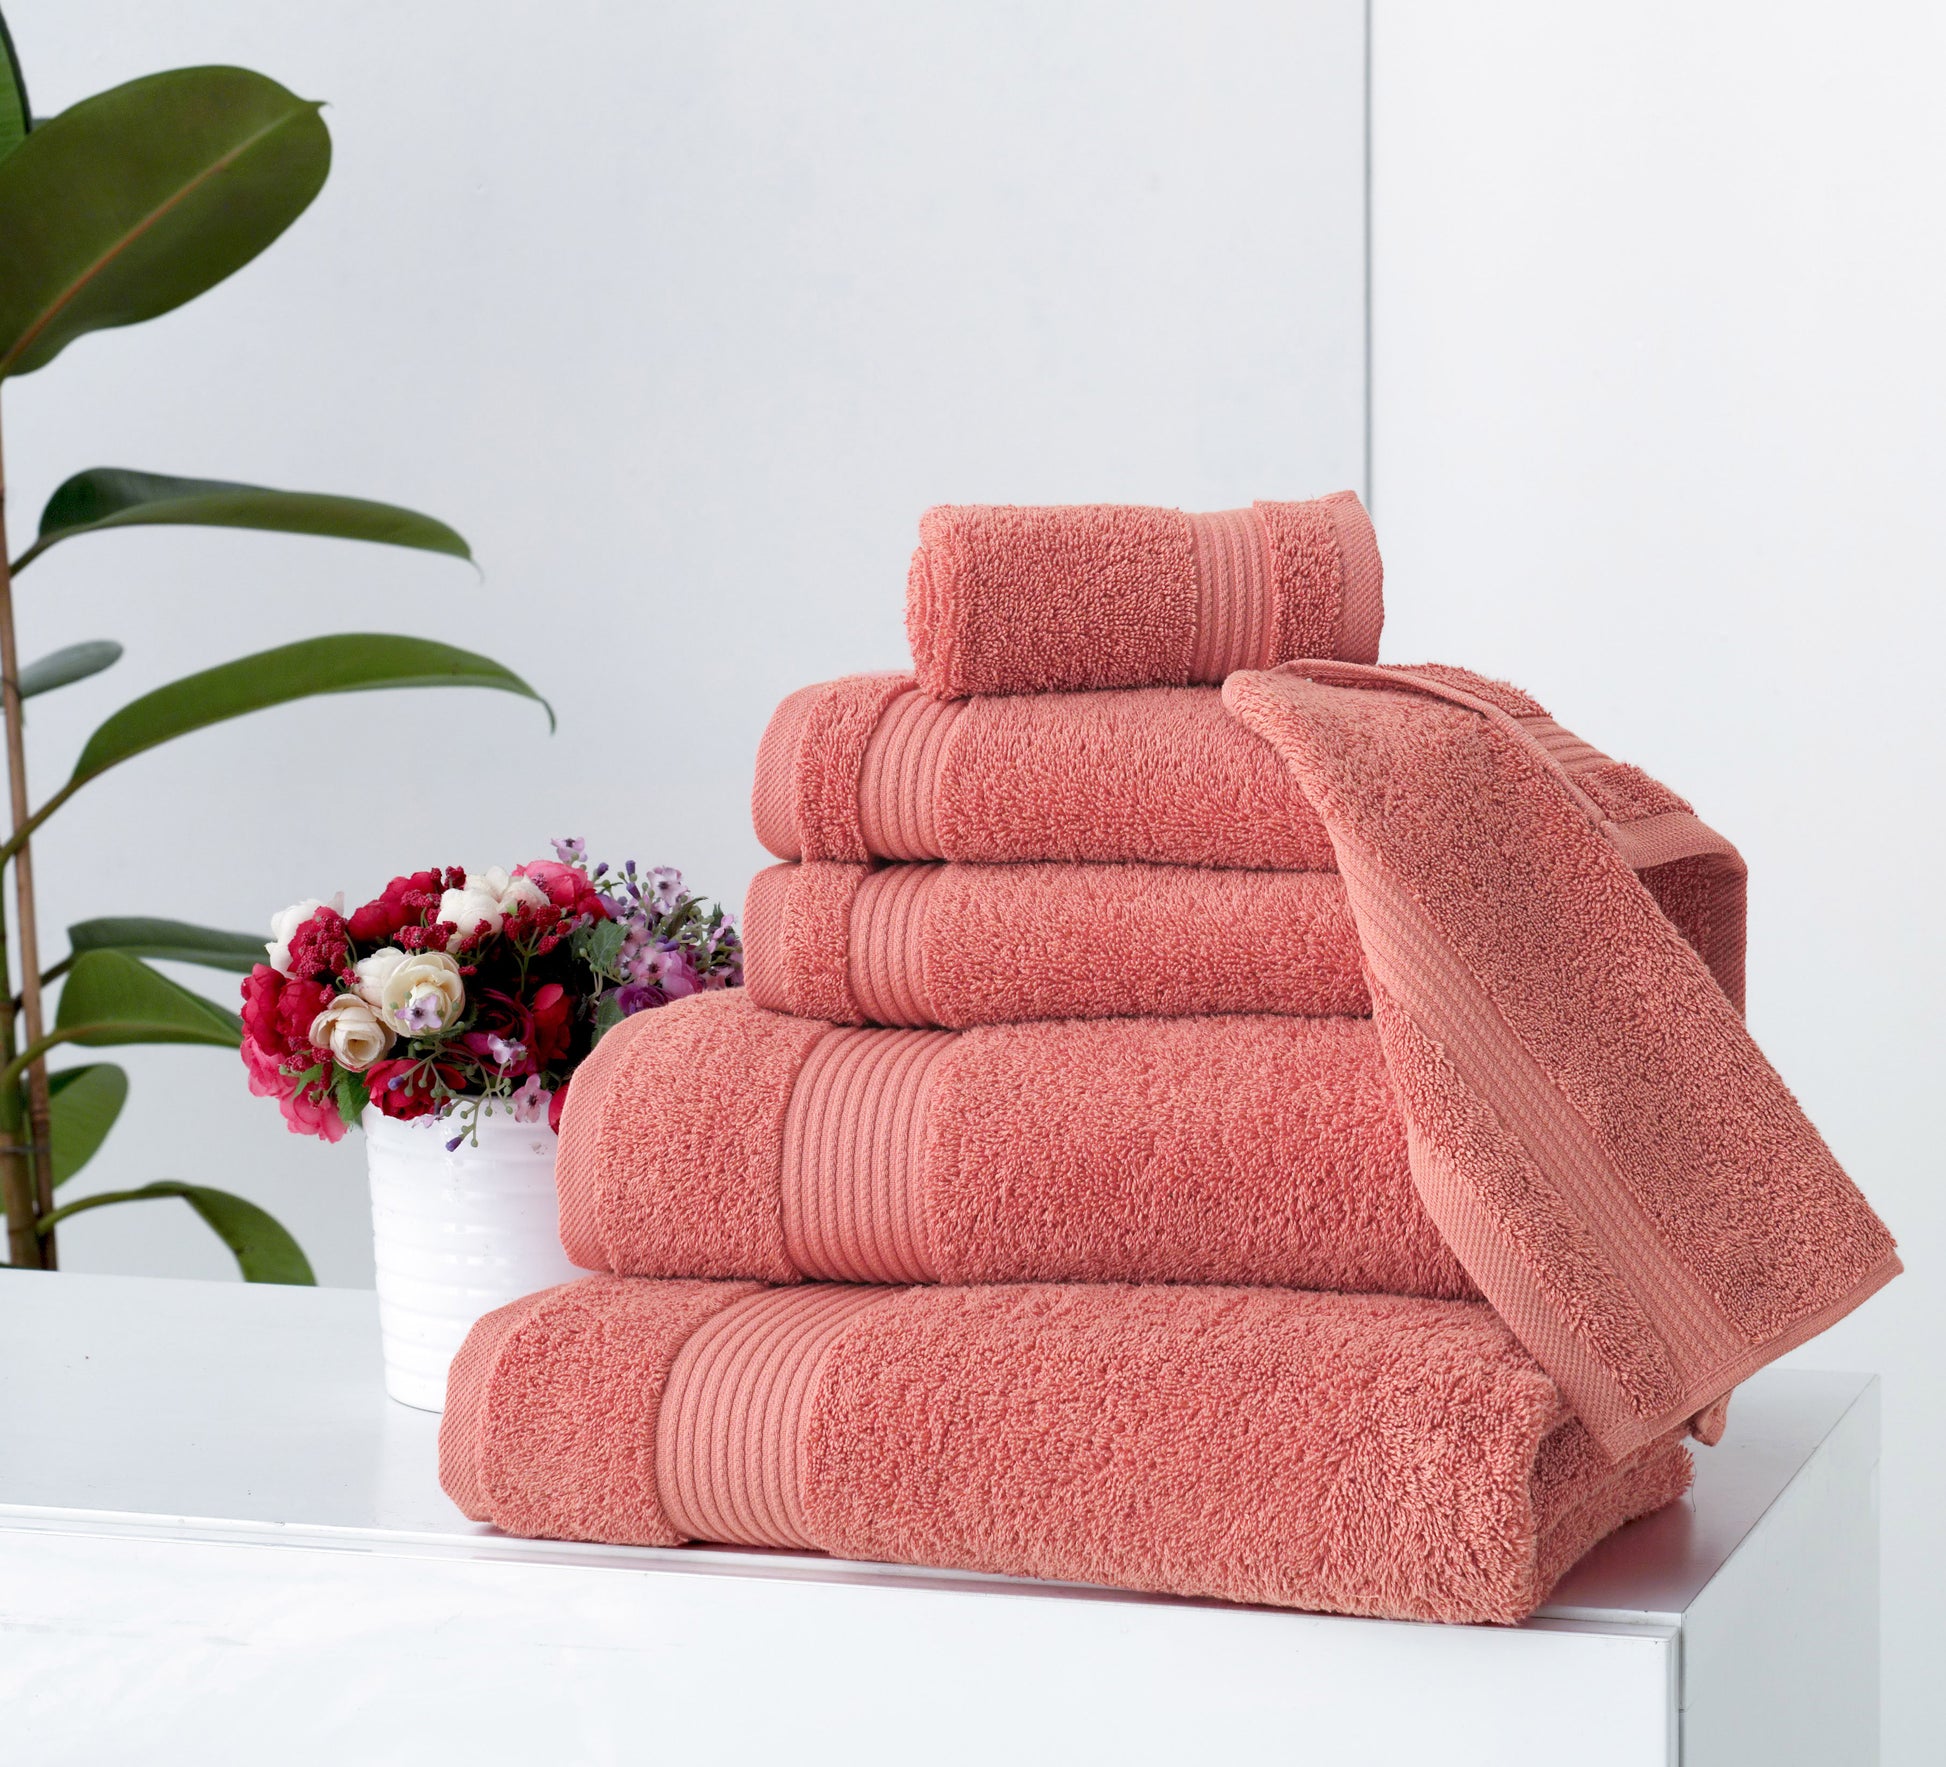 Amadeus Luxury Turkish Cotton Premium 6 Pc Towel Set - Classic Turkish Towels